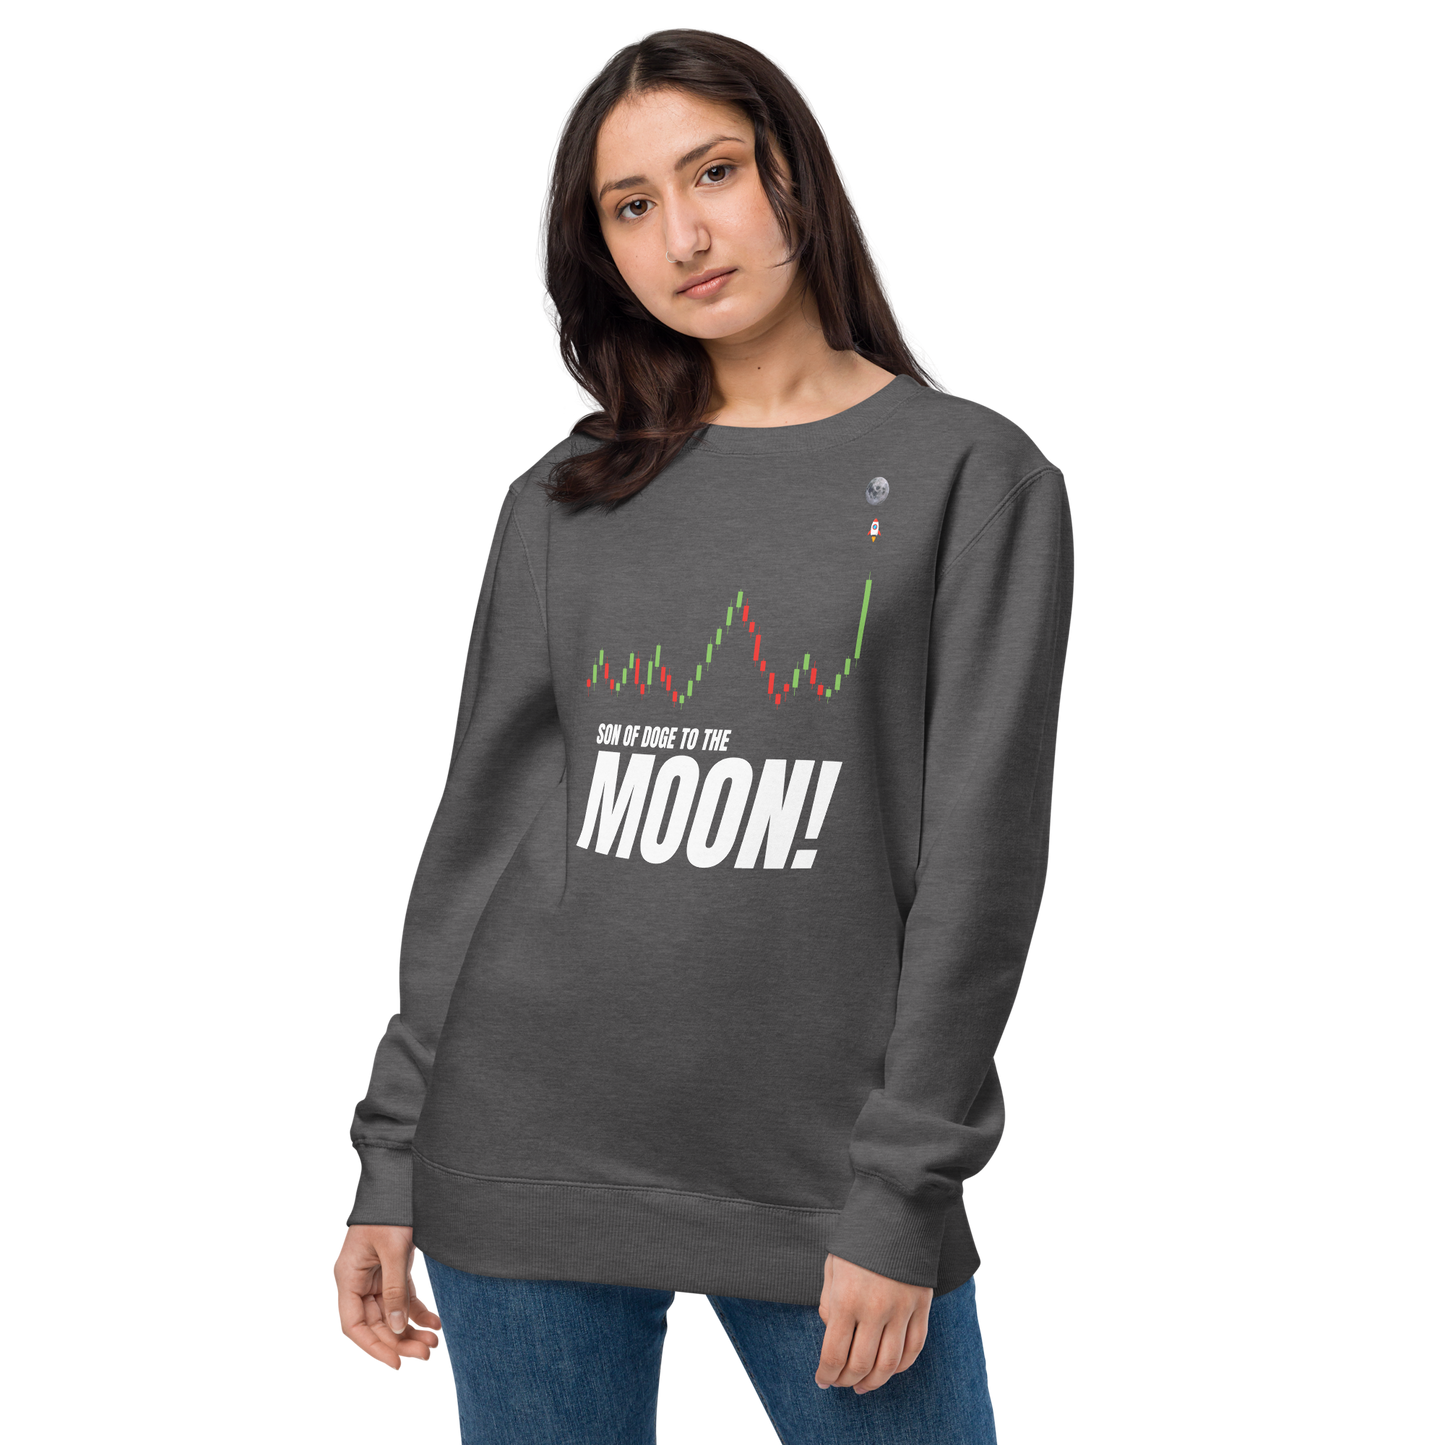 Son Of Doge 'To The Moon' Women's fashion sweatshirt